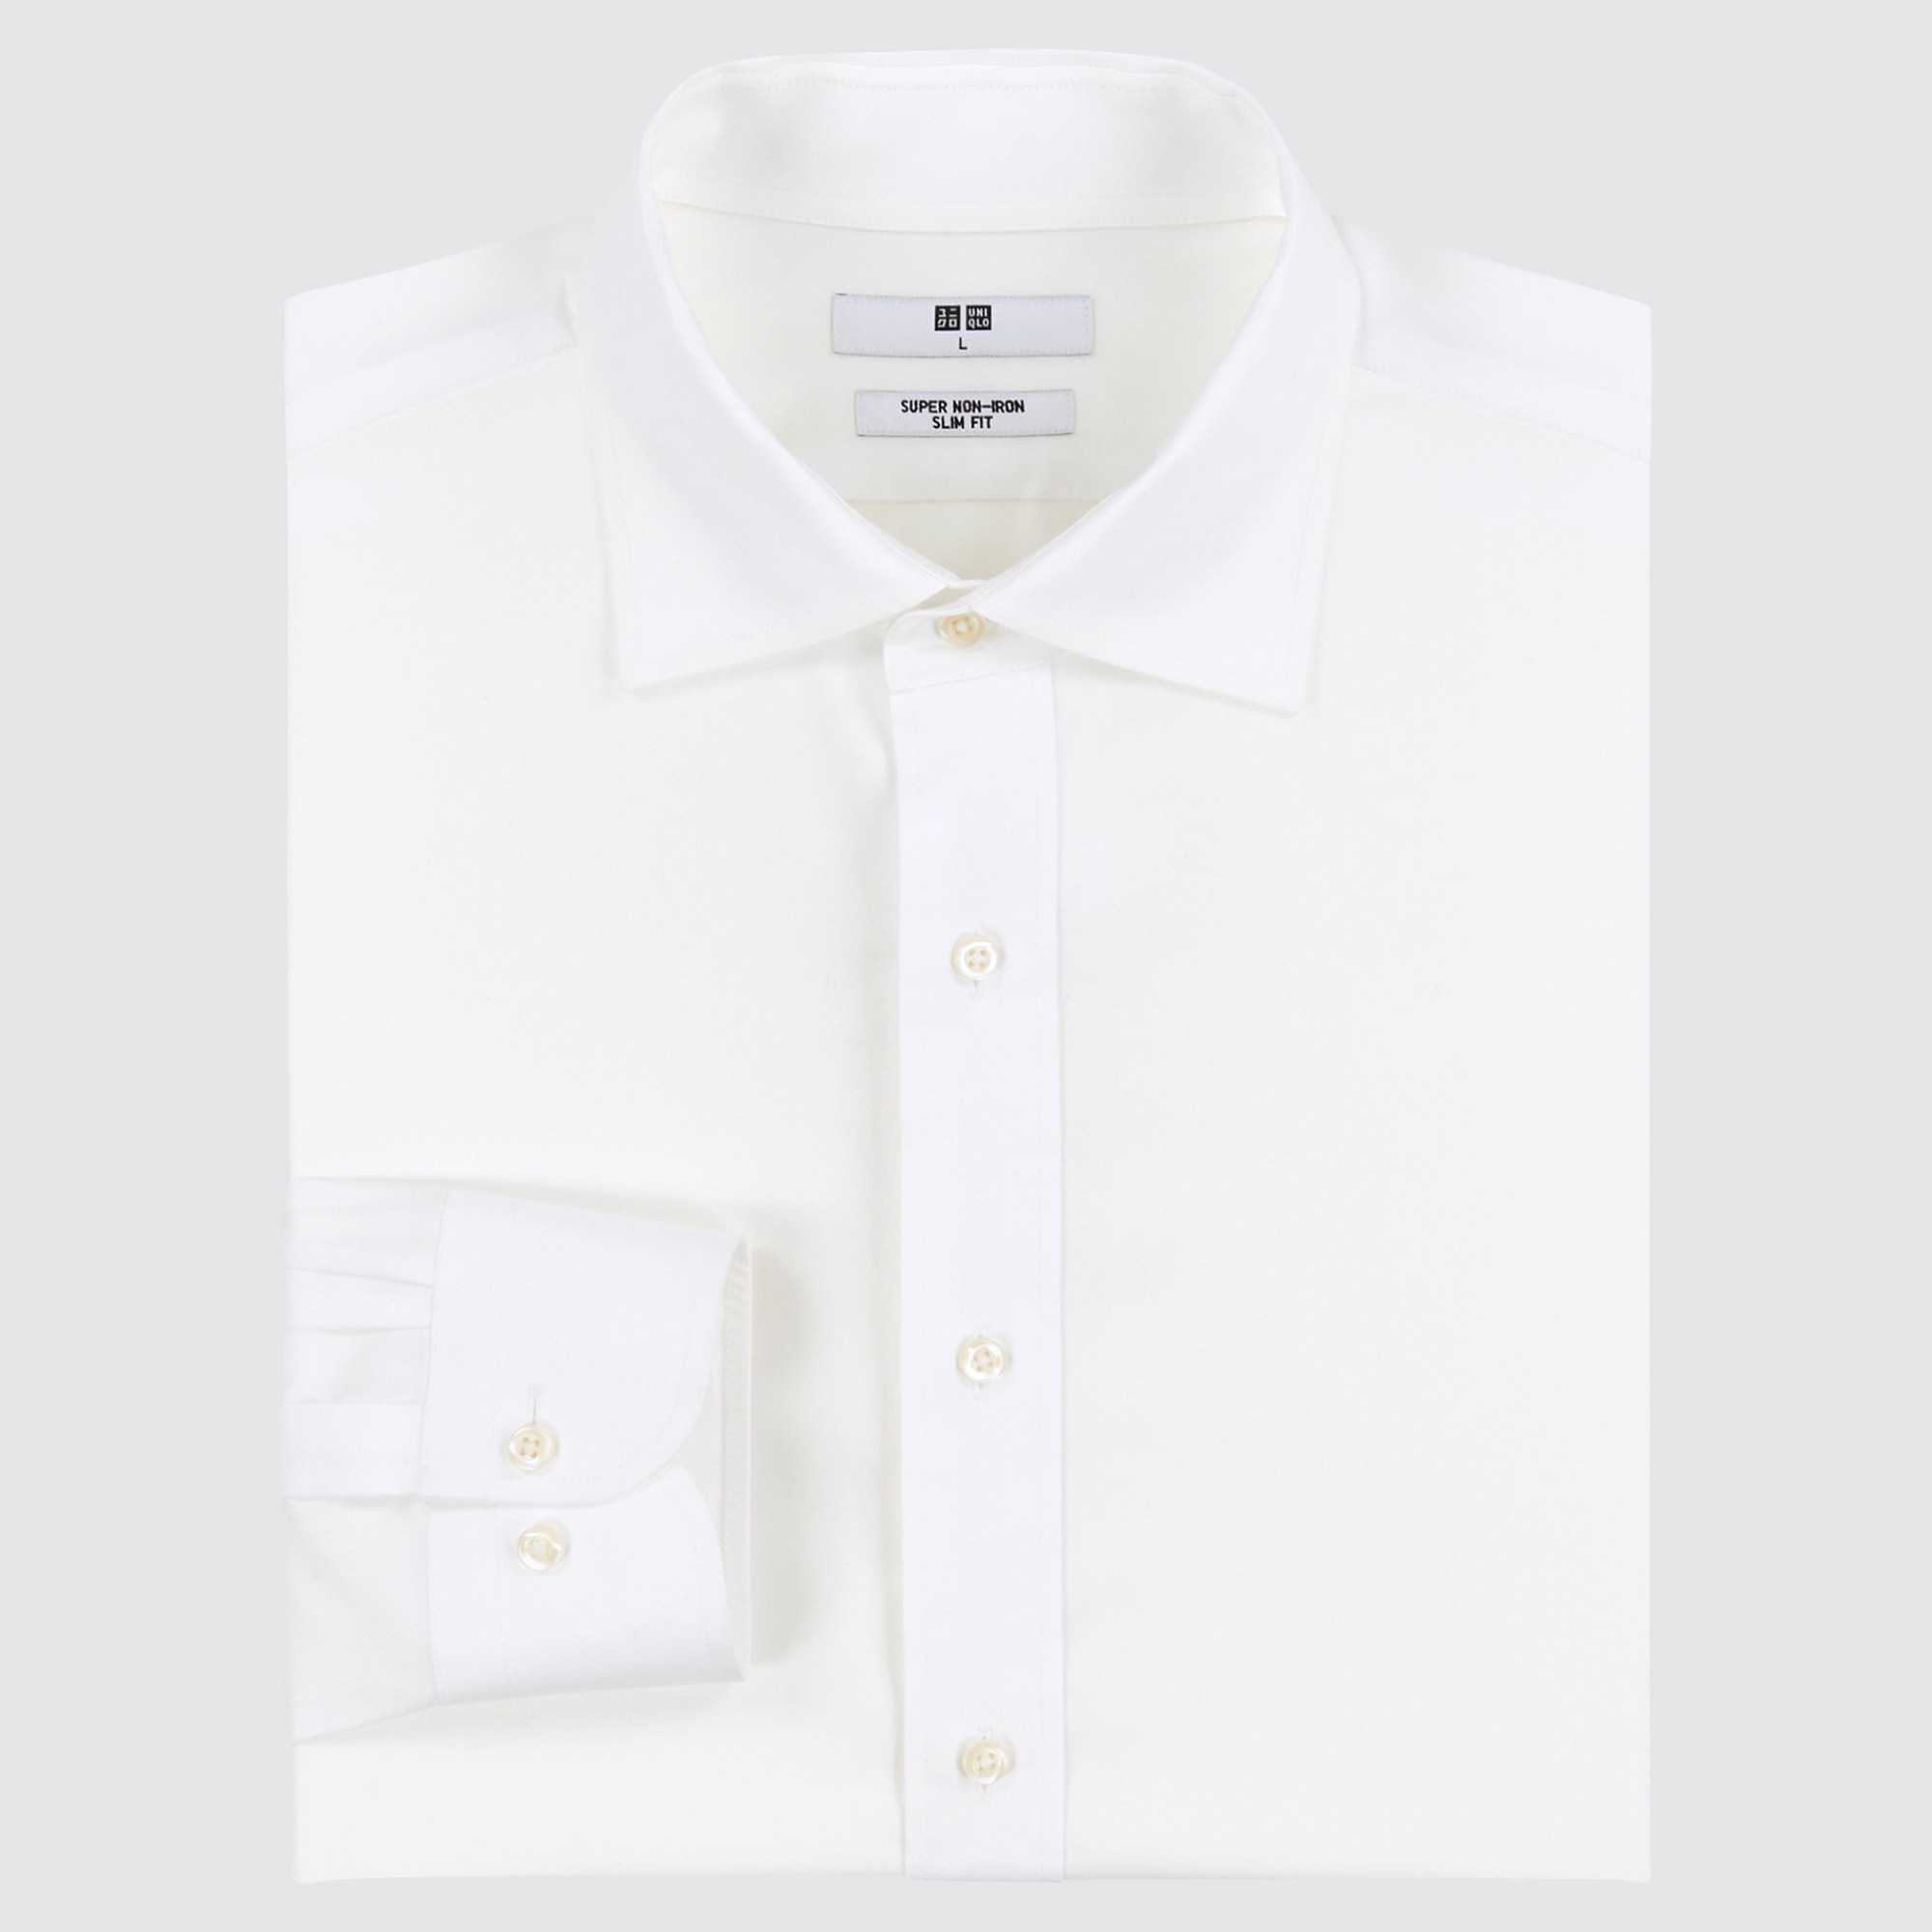 Рубашка мужская UNIQLO 441713COL00 белая 3XL (доставка из-за рубежа)